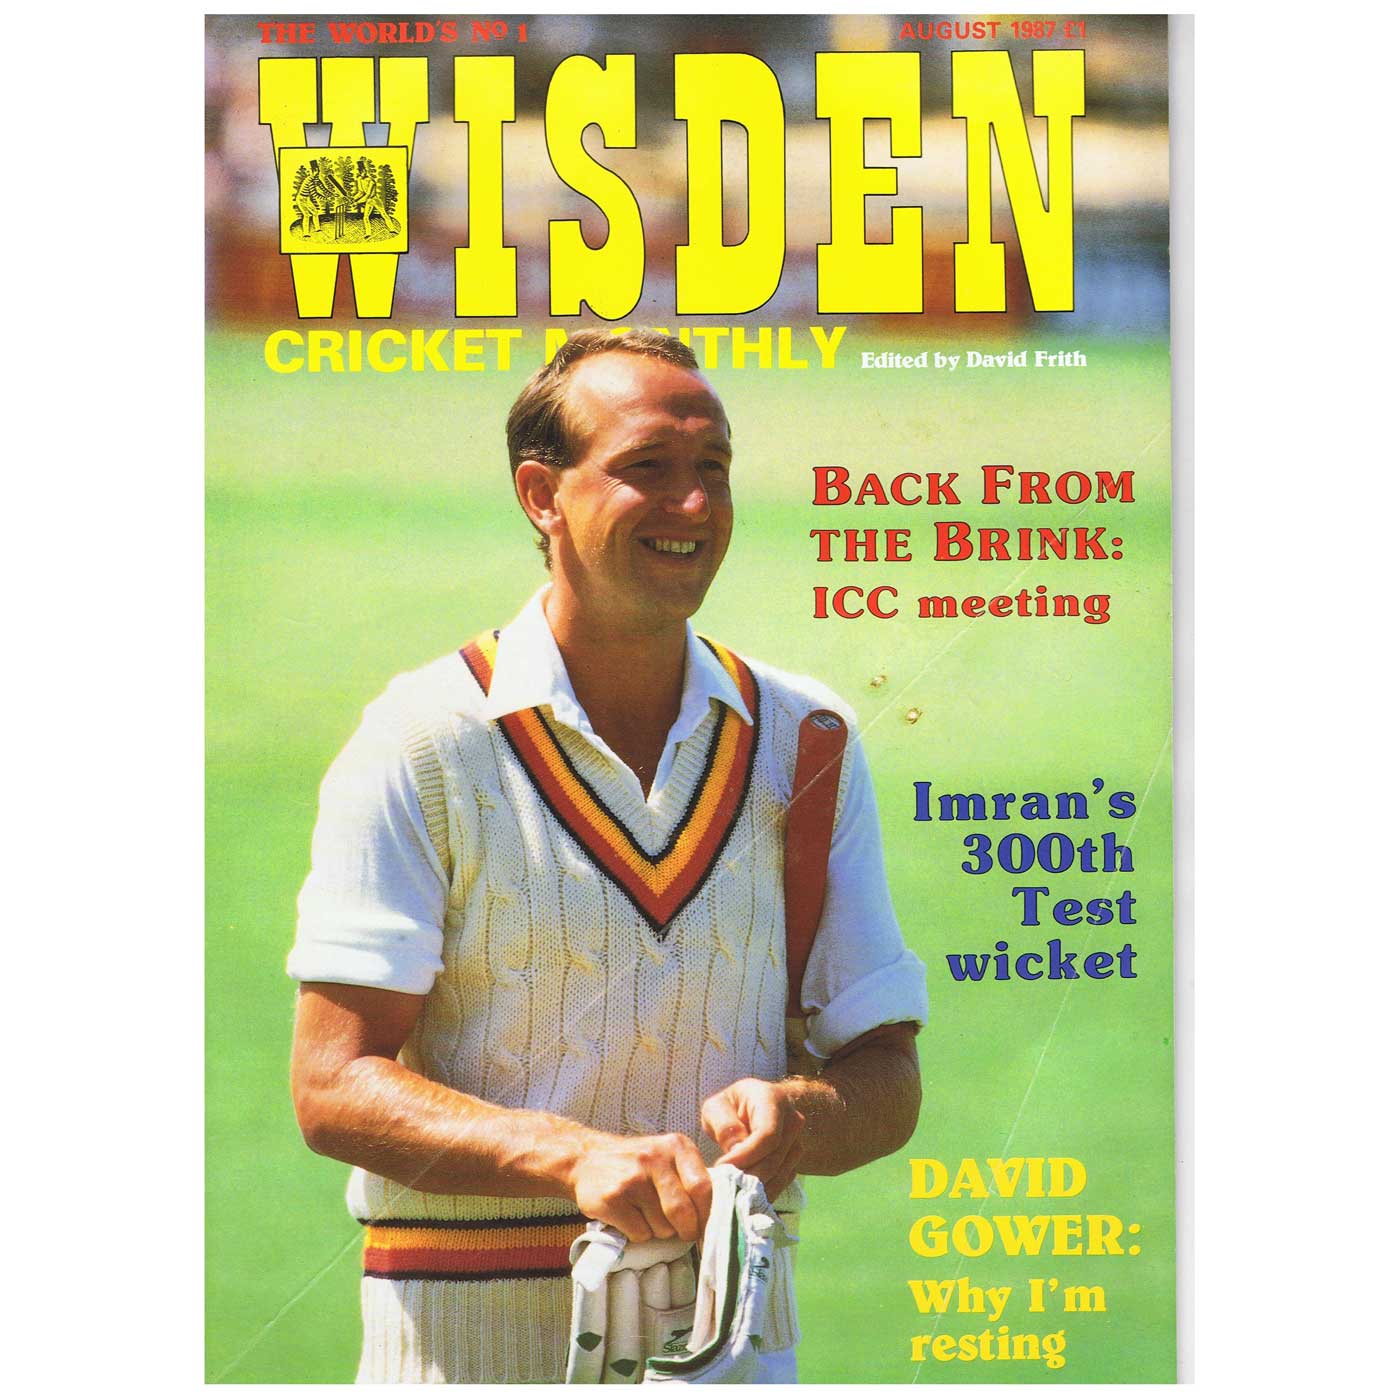 Wisden Cricket Monthly - an original edition from August 1987